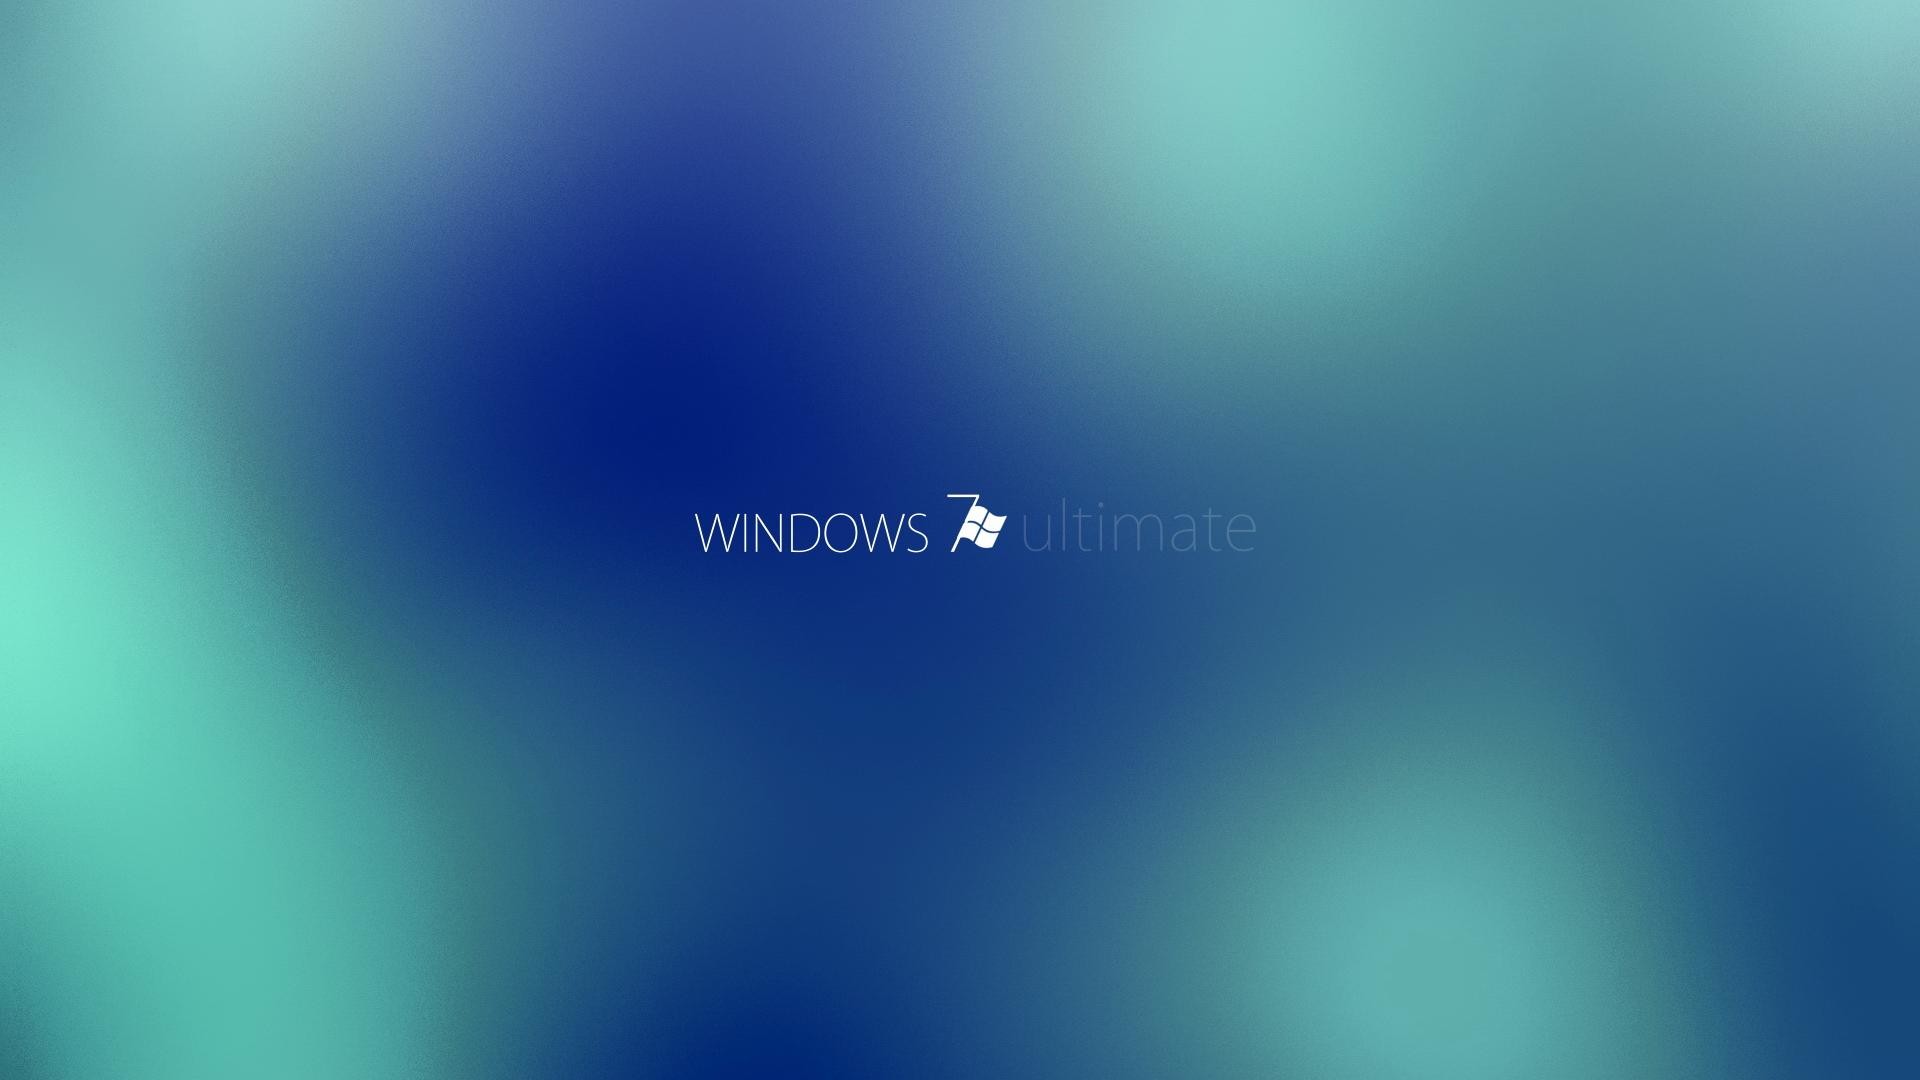 Windows Ultimate Wallpaper Image